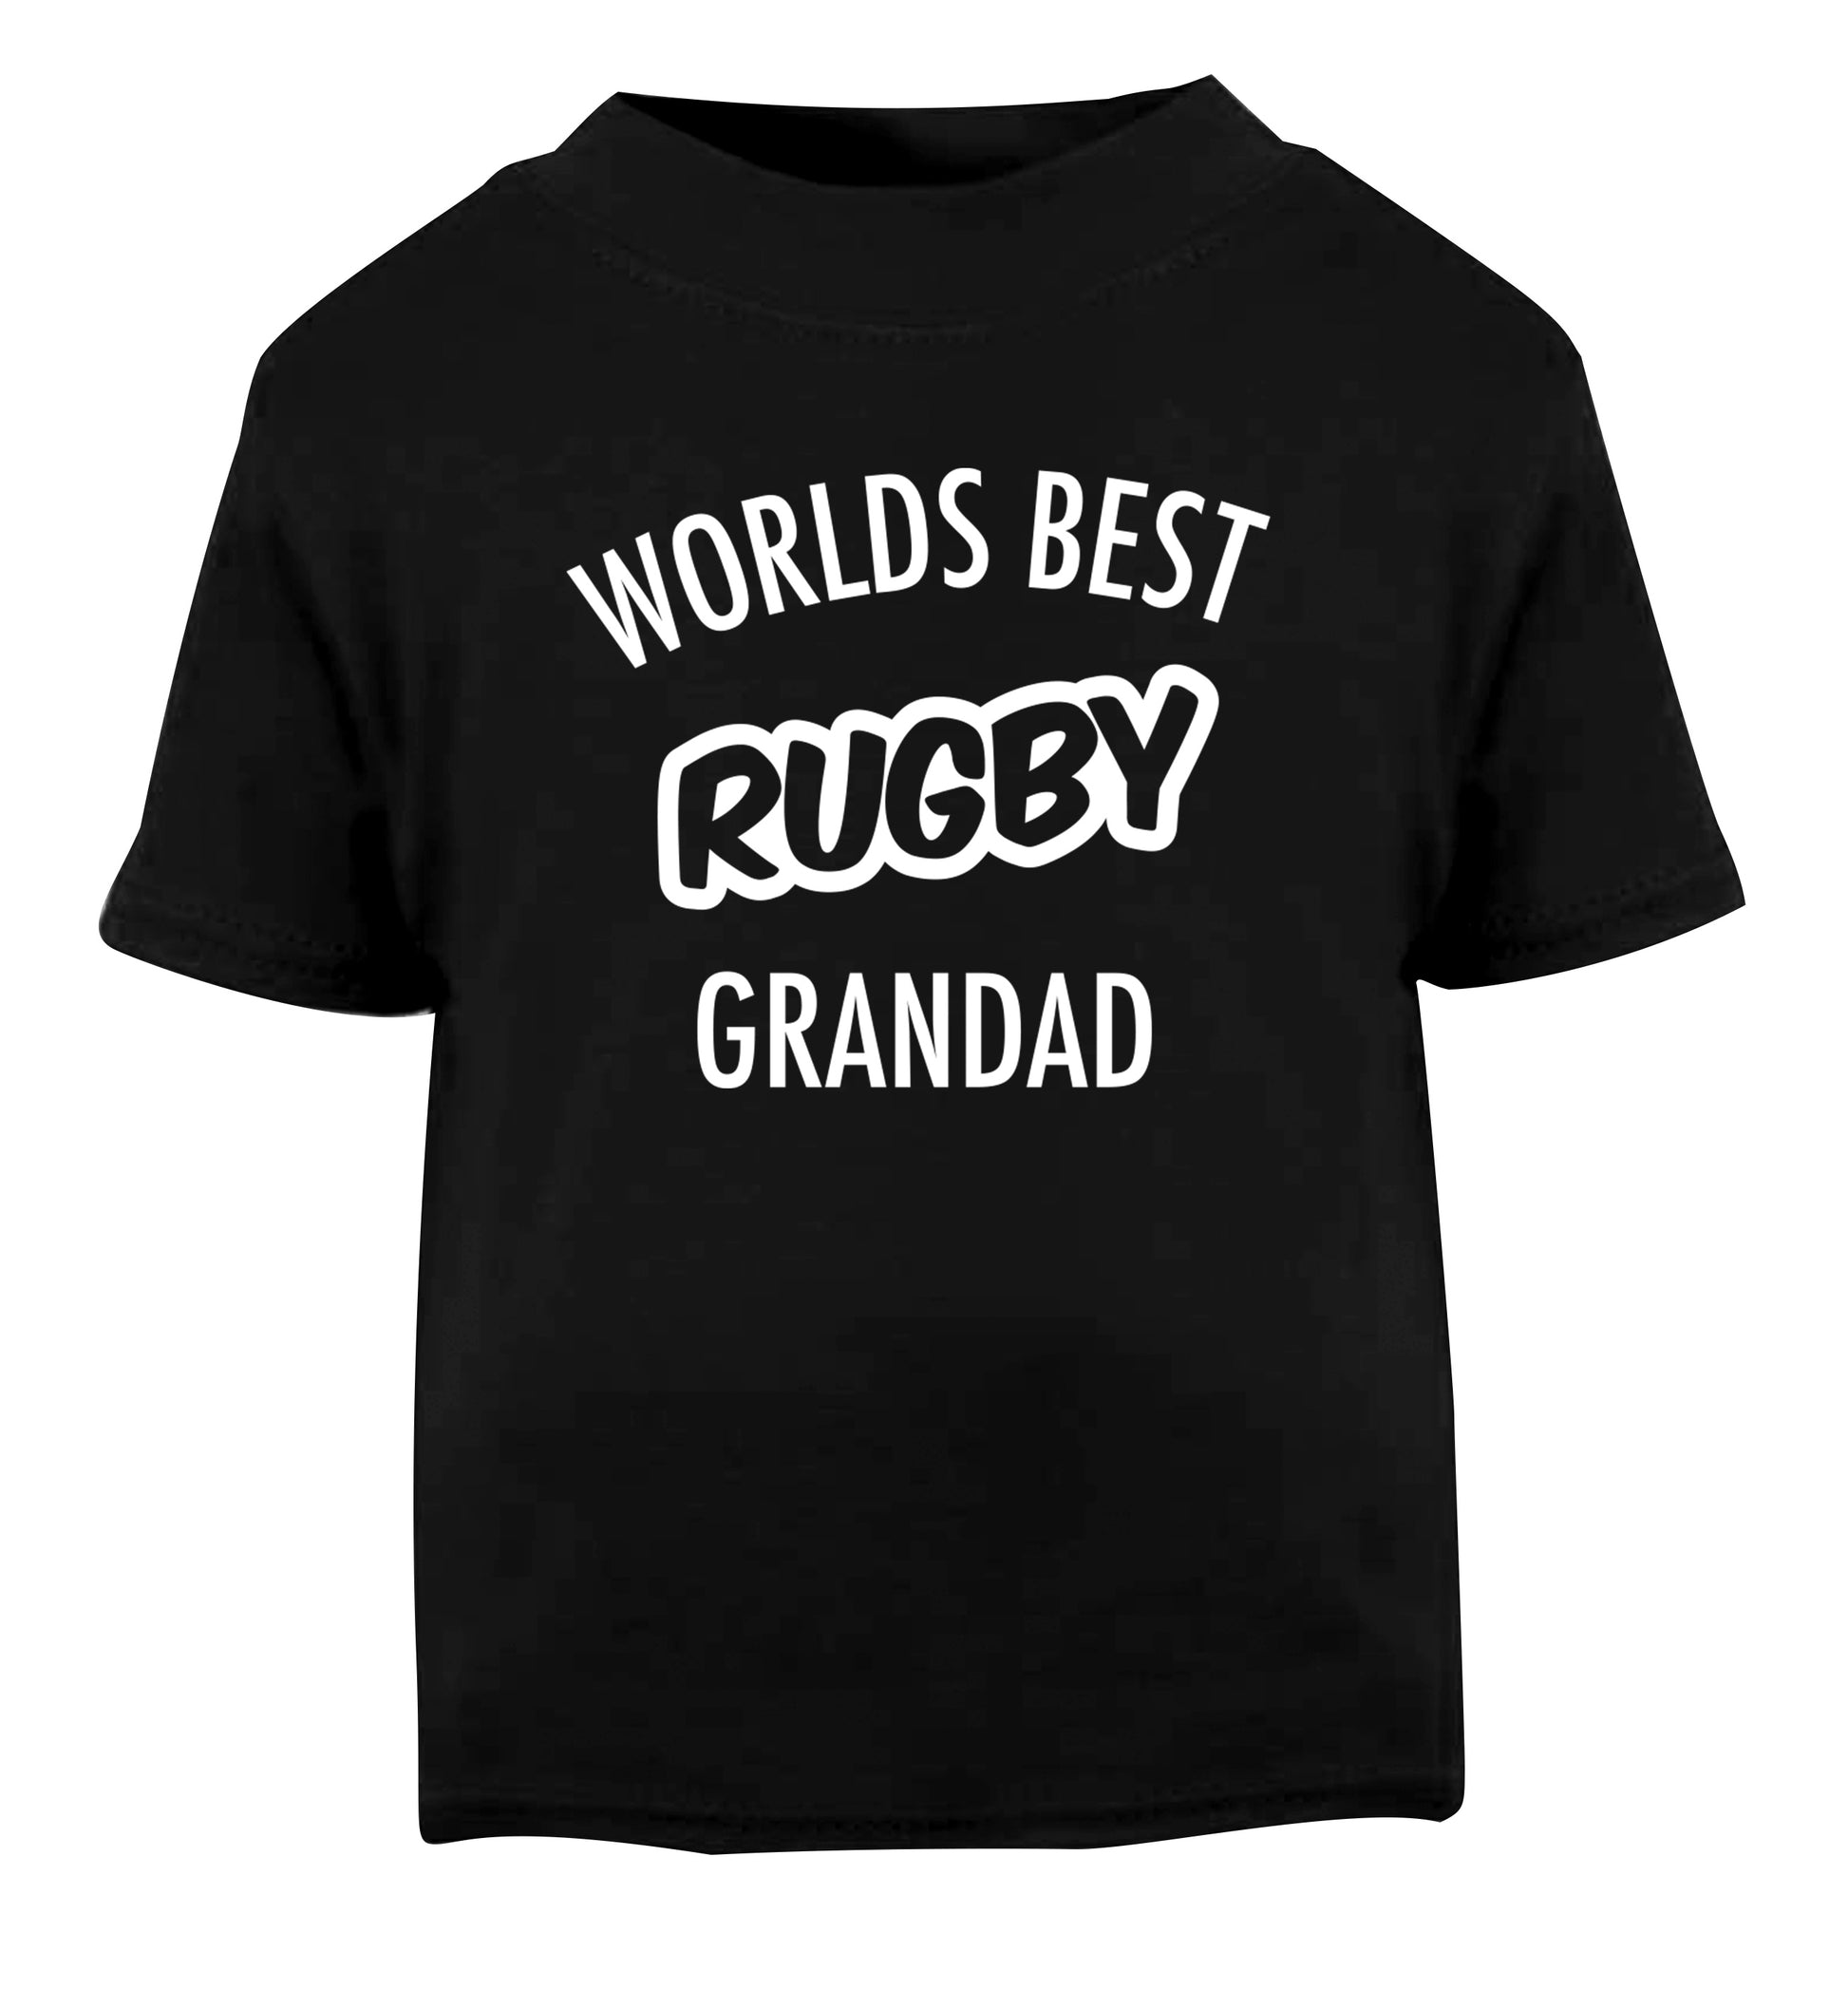 Worlds best rugby grandad Black Baby Toddler Tshirt 2 years